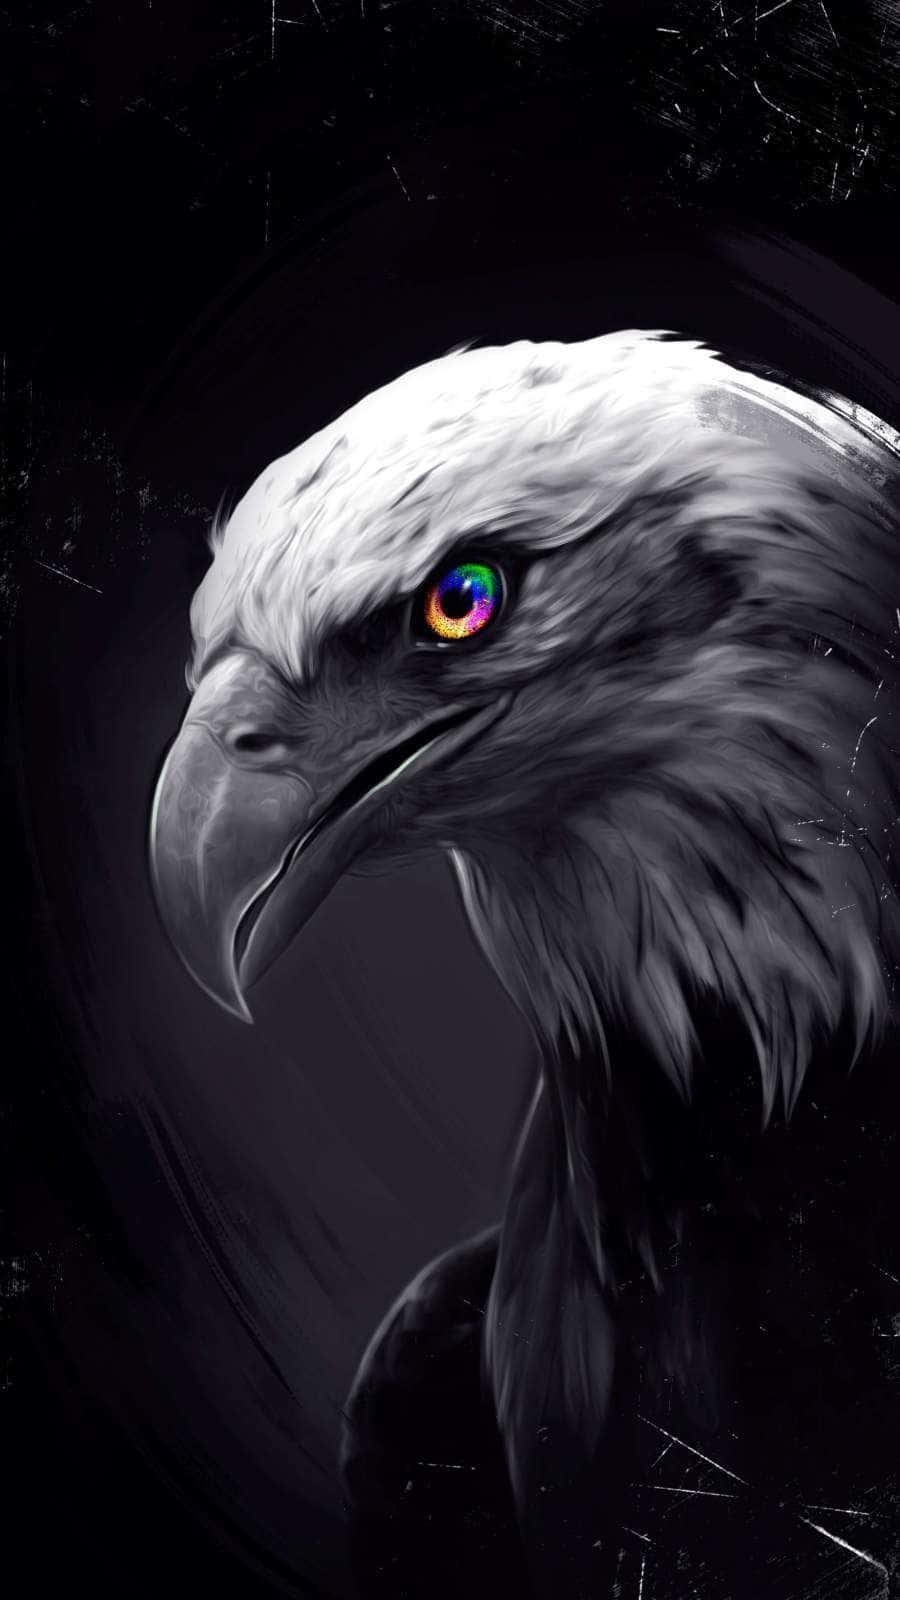 Majestic Eagle in Flight - Wallpaper for iPhone Wallpaper